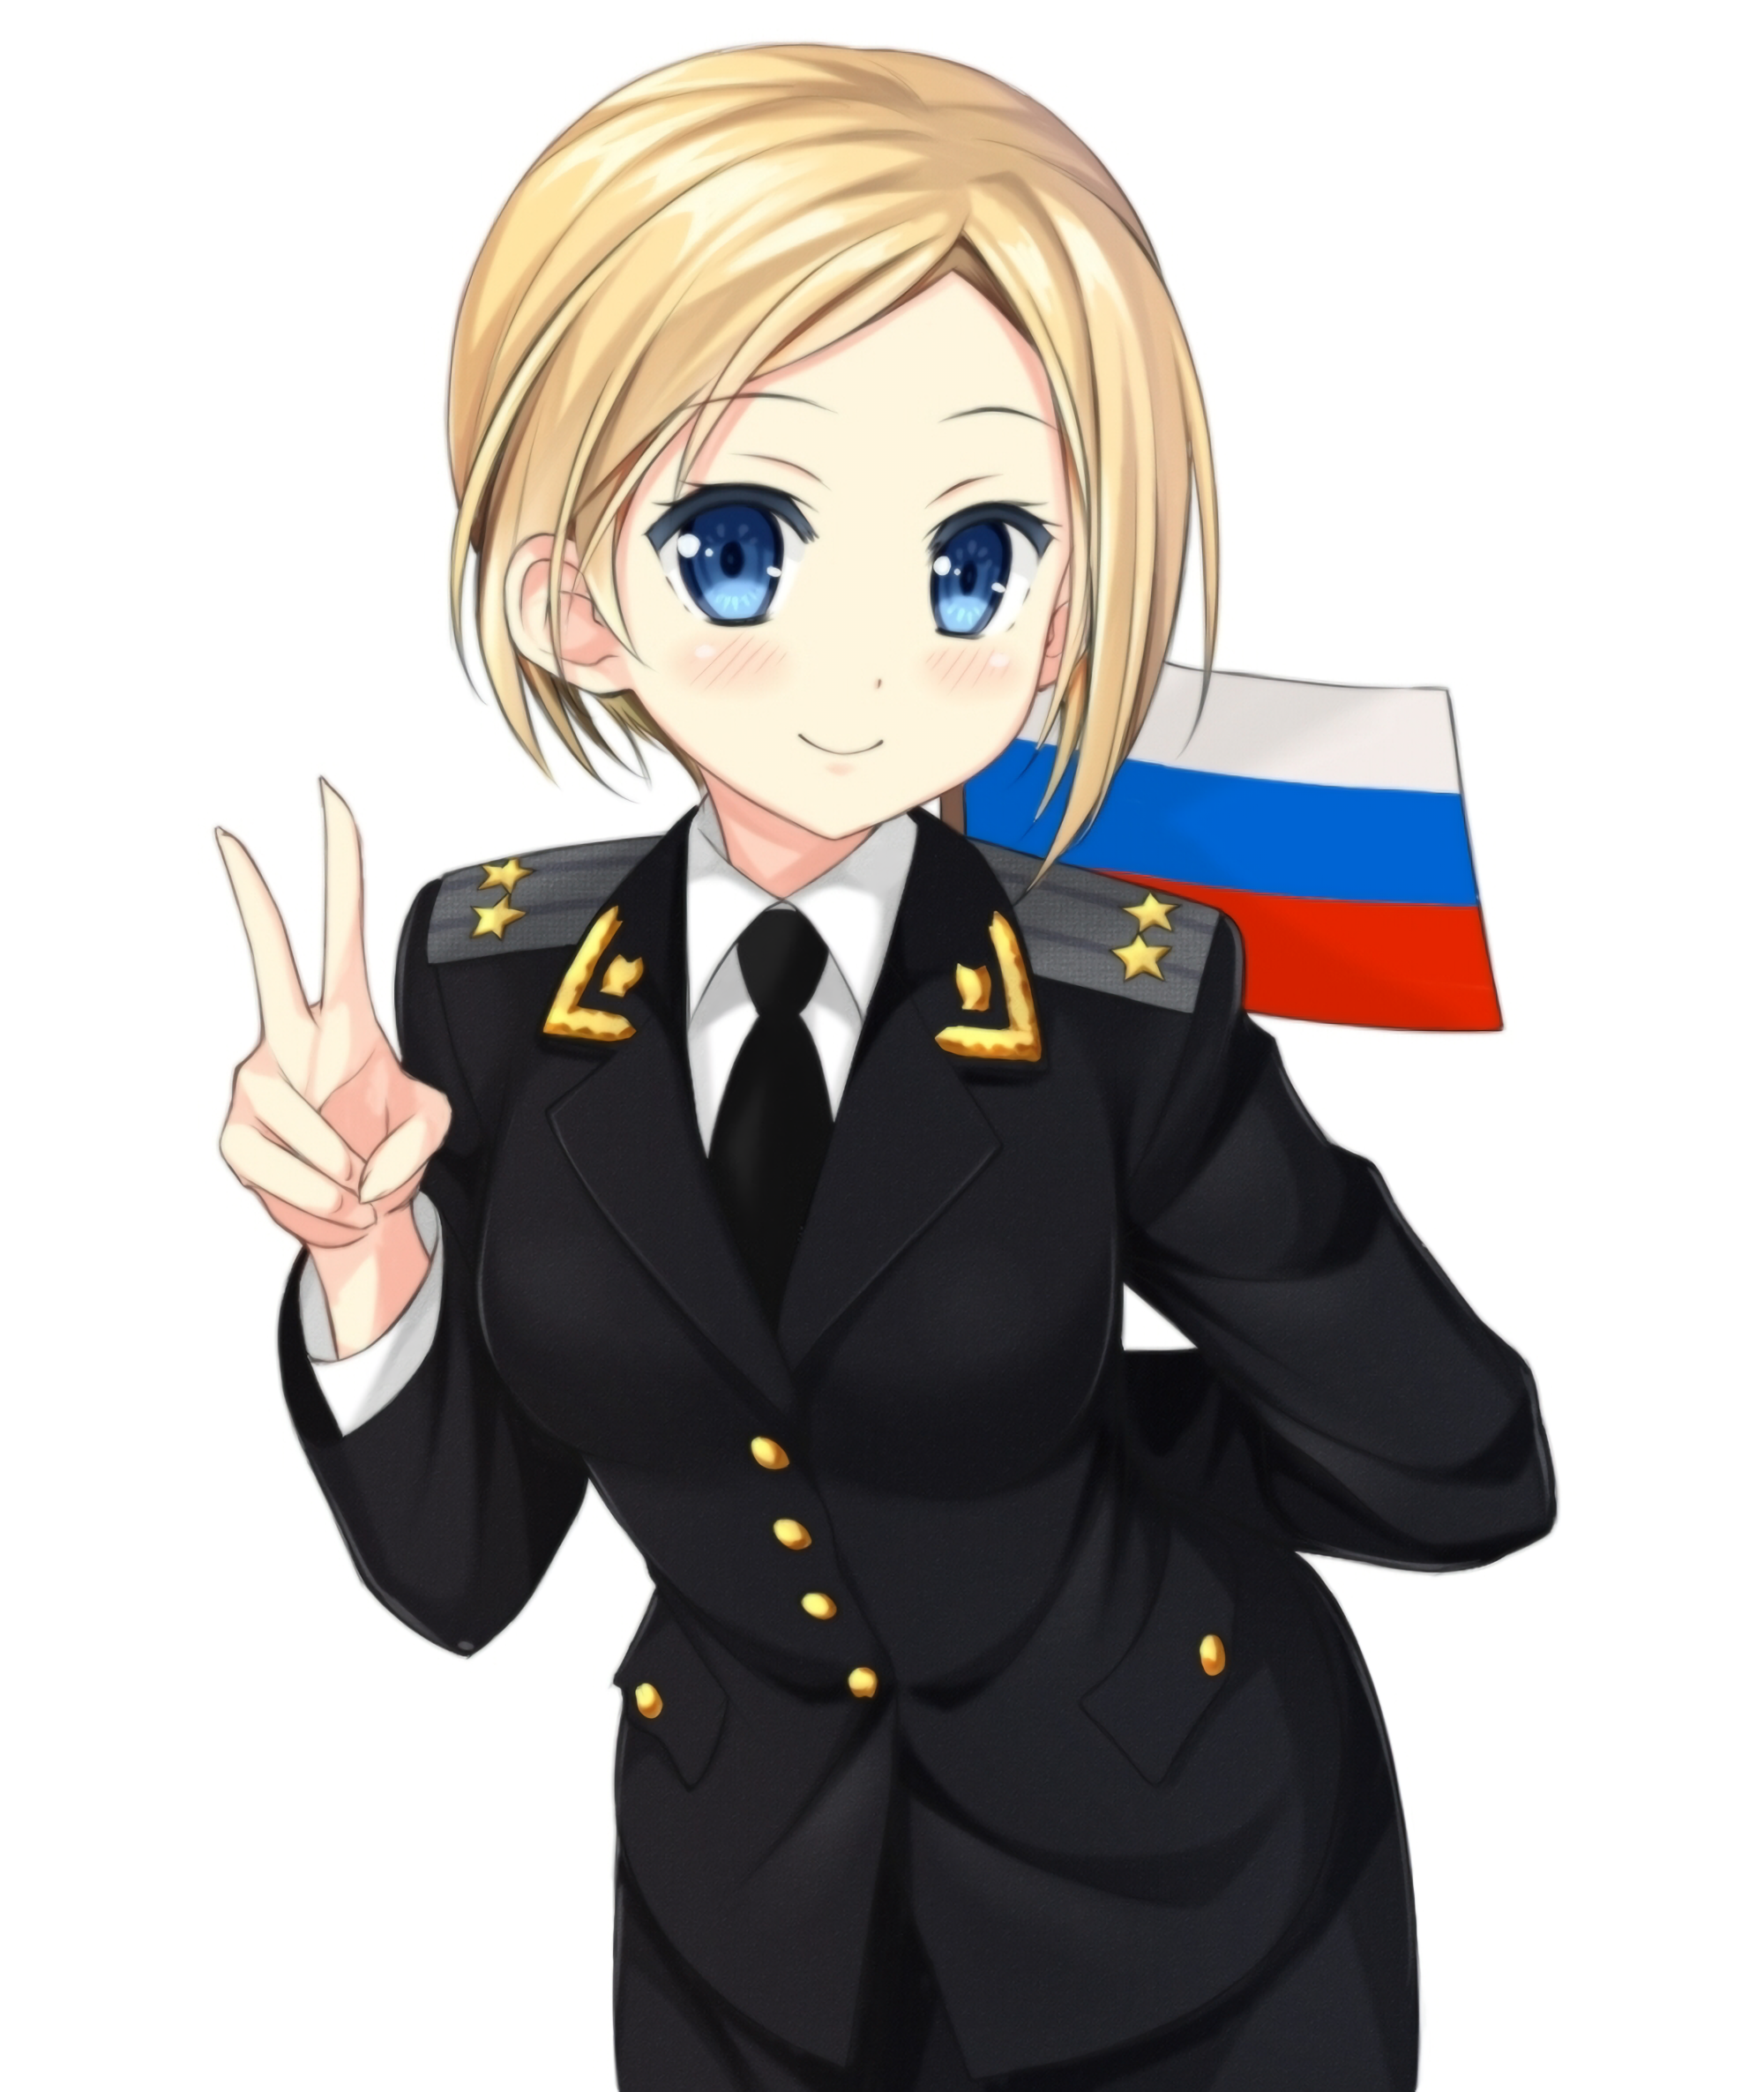 Anime 2000x2372 anime anime girls Natalia Poklonskaya short hair blonde blue eyes uniform Russian